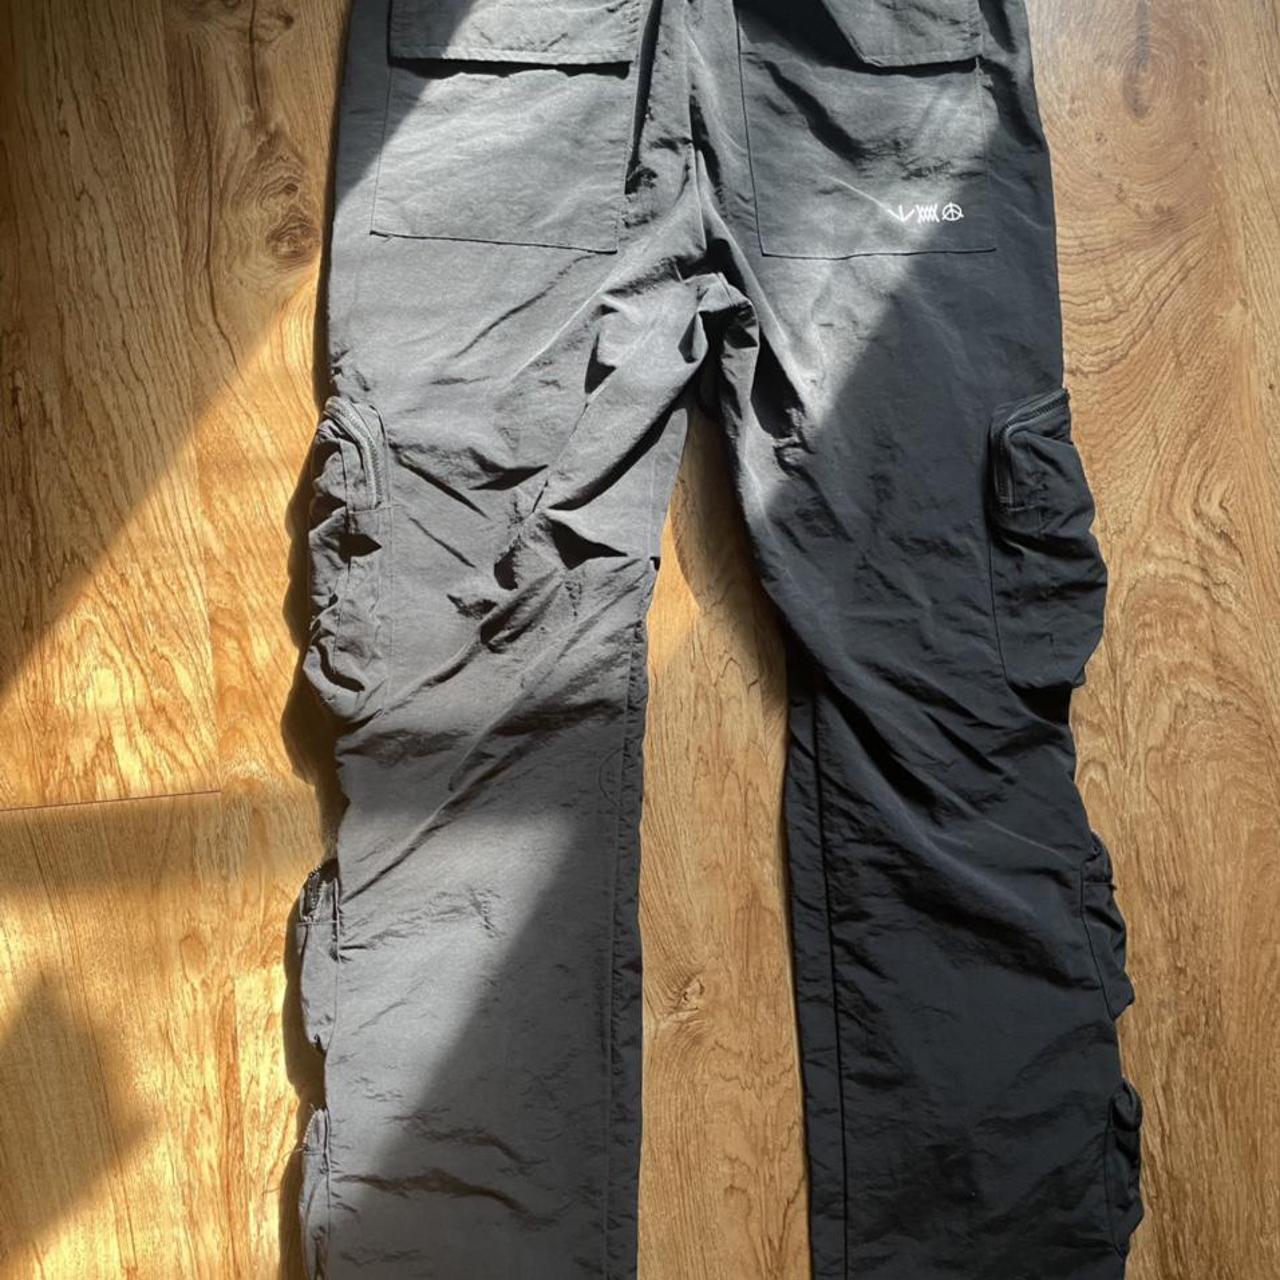 WHOISJACOV 6 pocket cargo pants As seen on Travis - Depop